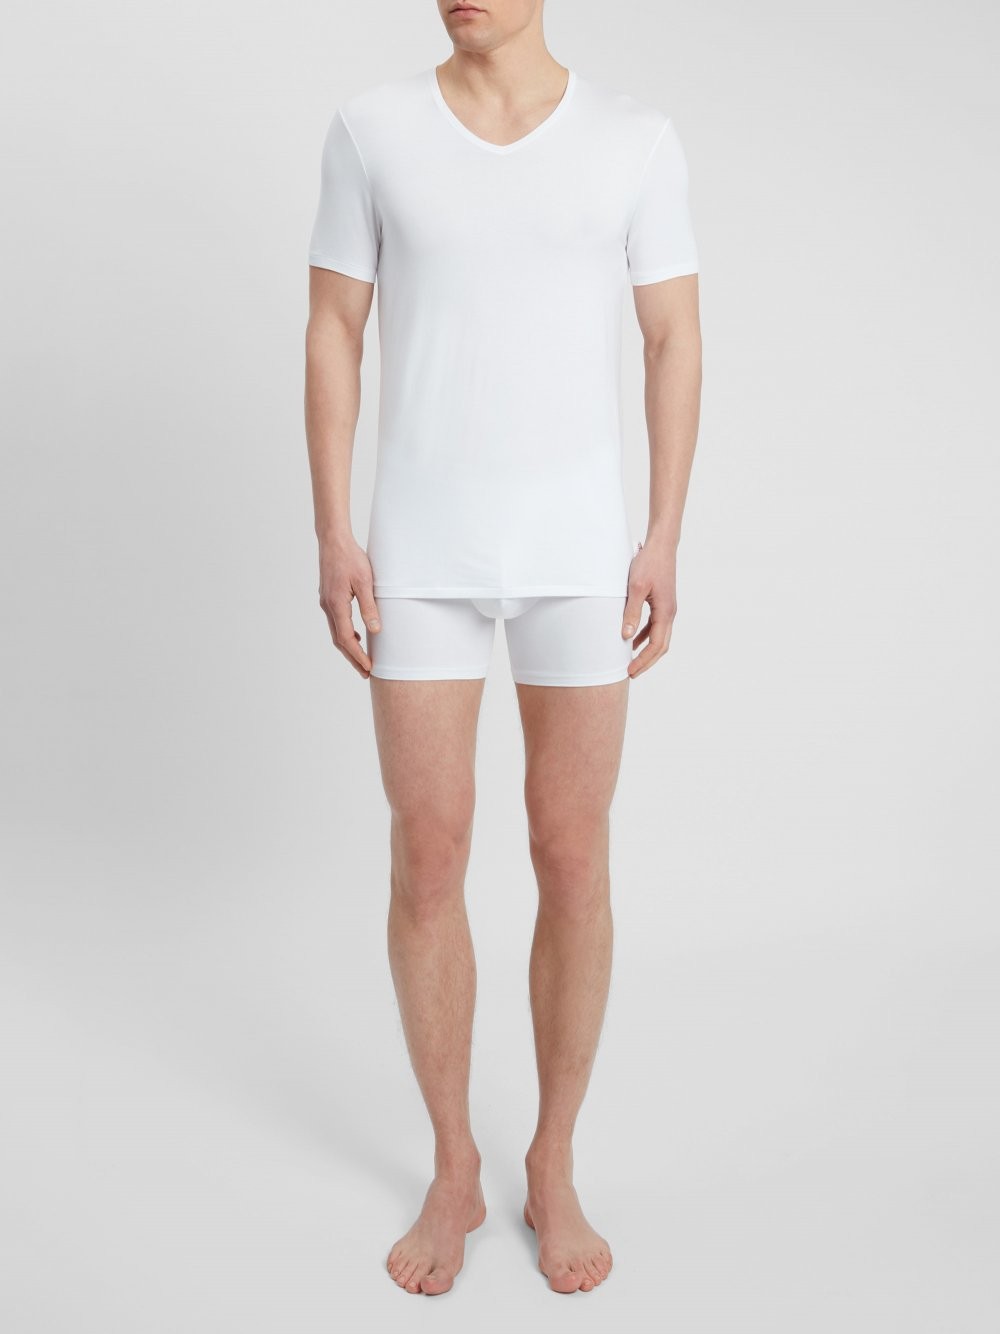 mens_underwear_v_neck_t_shirt_alex_micro_modal_stretch_white_model_1